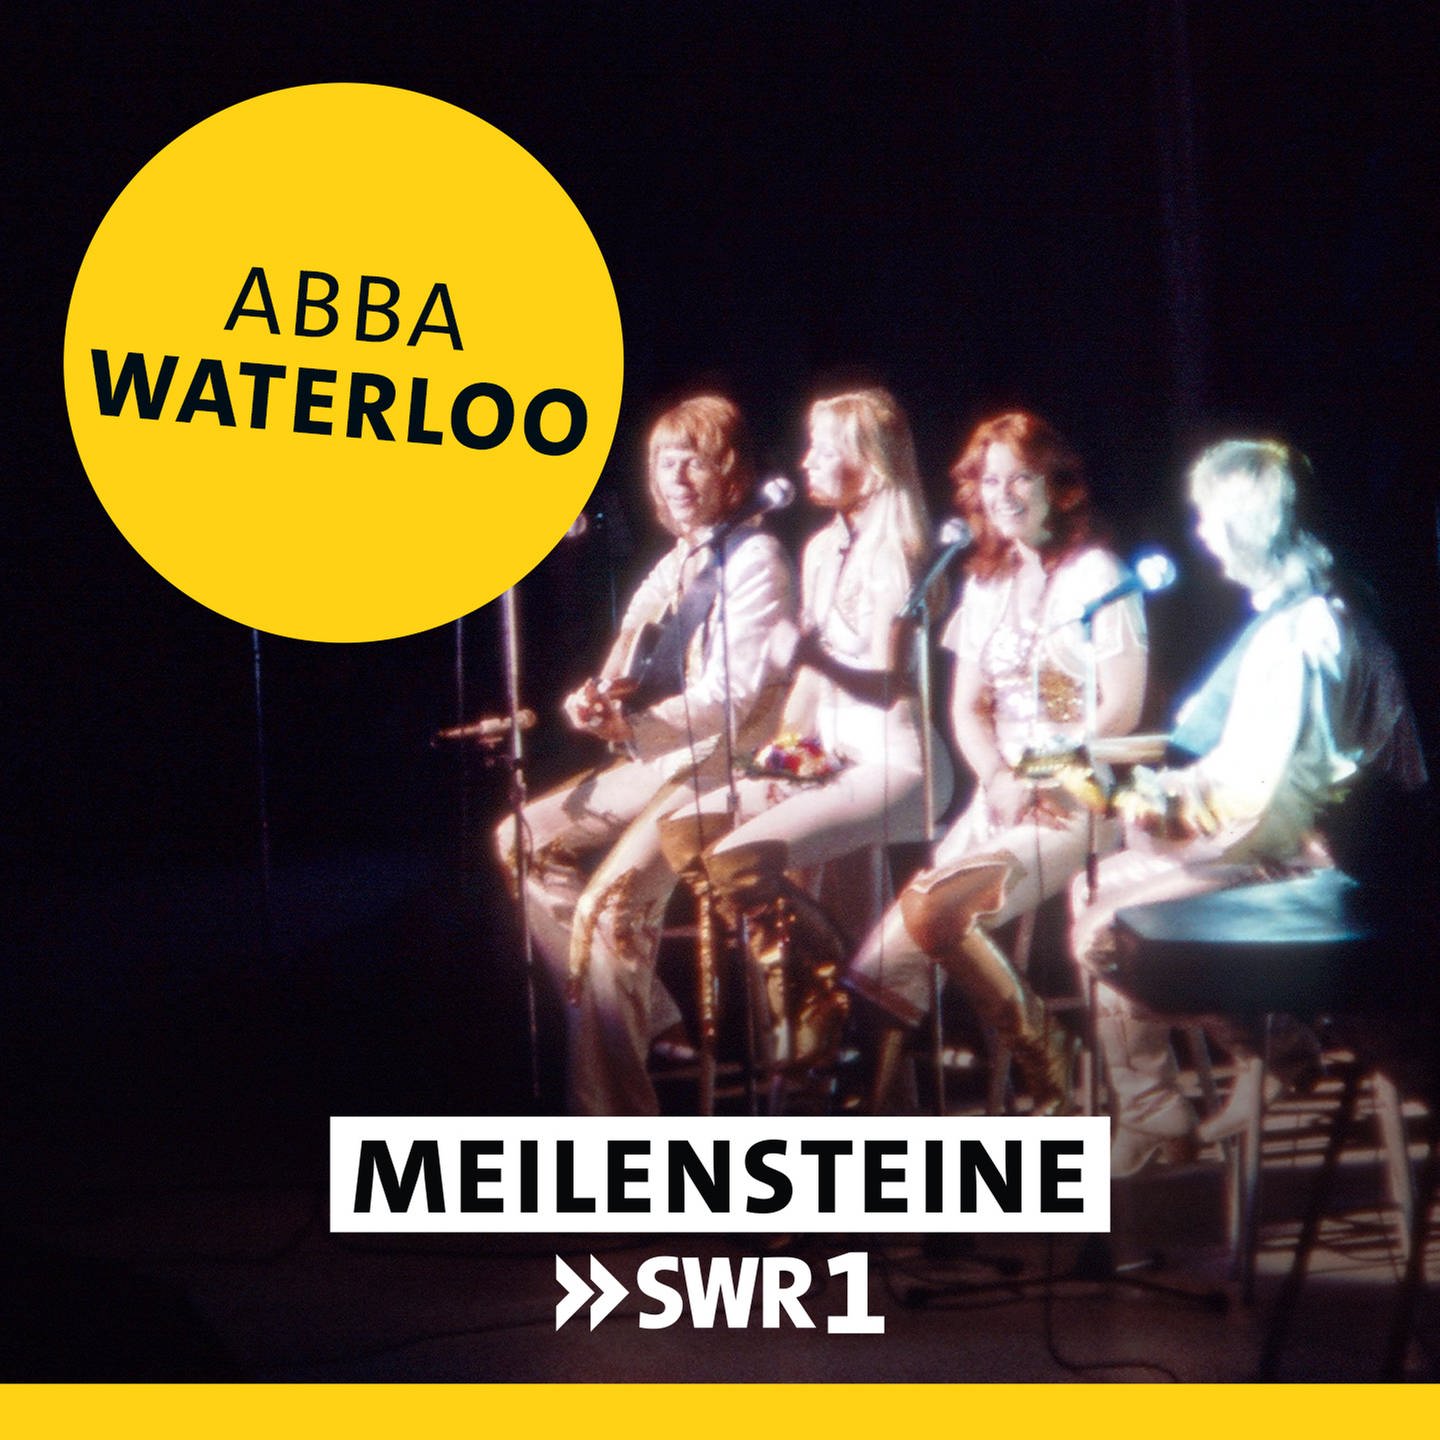 ABBA – "Waterloo"